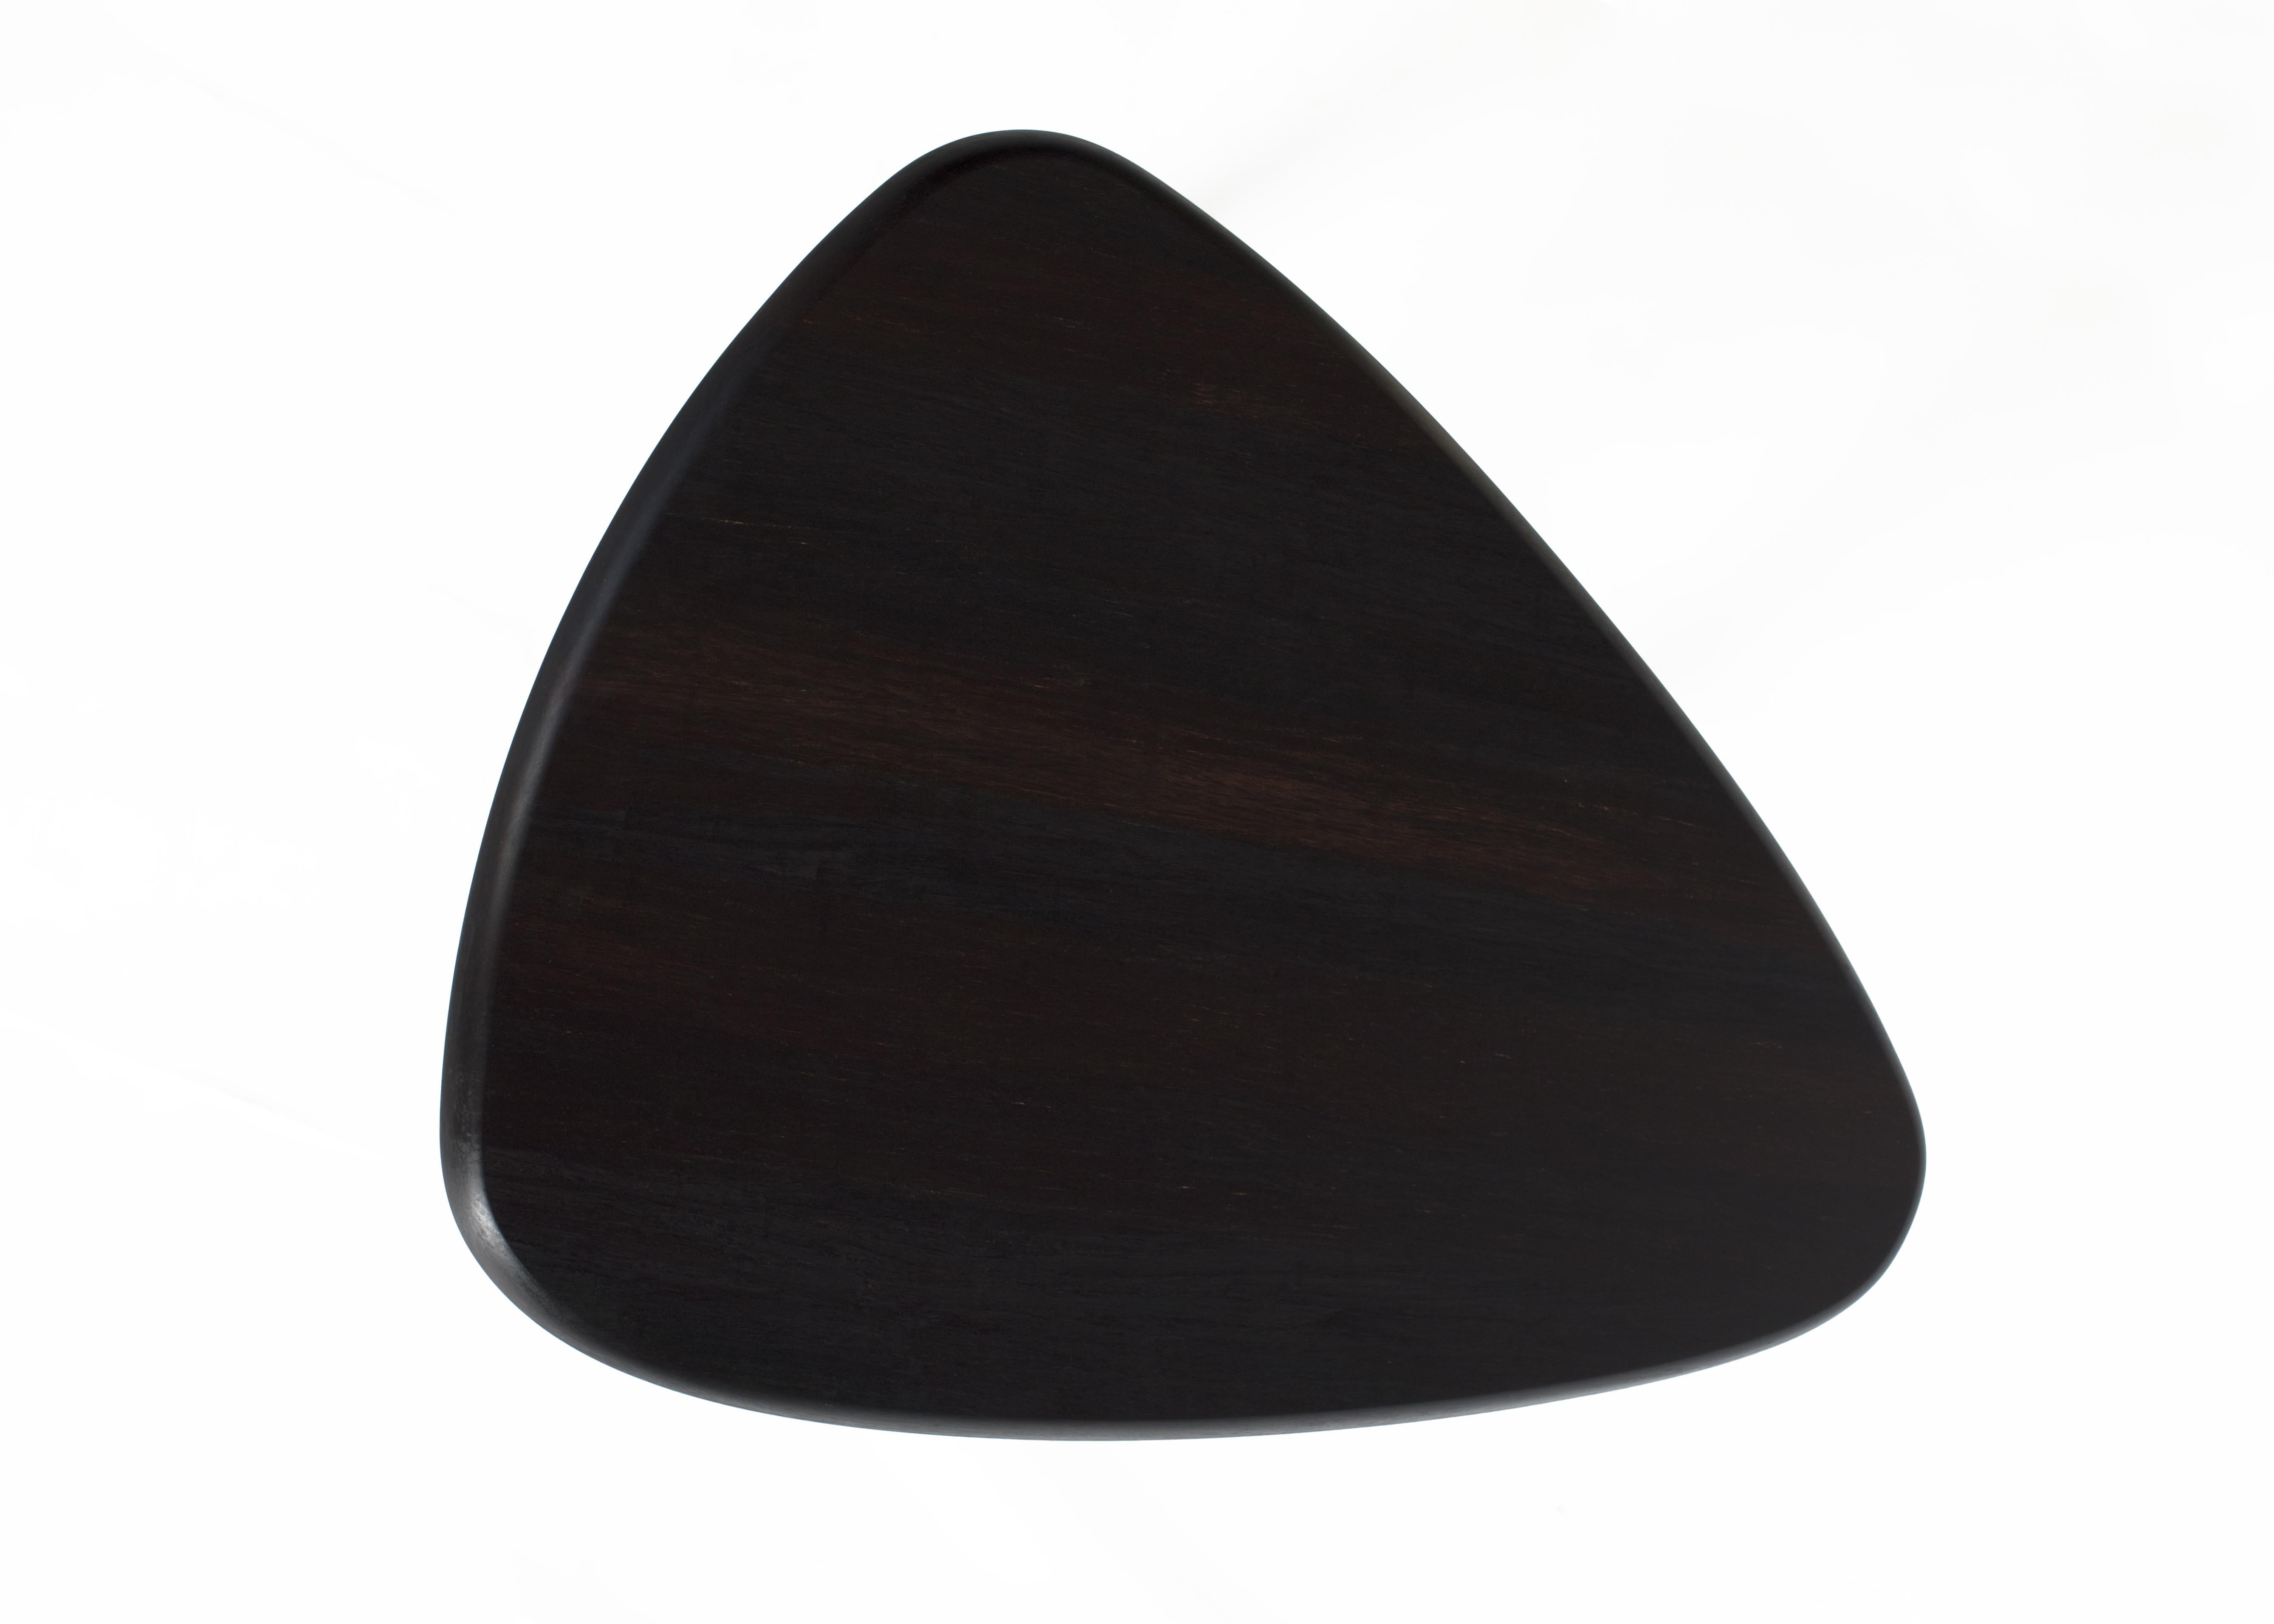 Unique Triangular Coco De Mer Table by Jesse Sanderson In New Condition For Sale In Geneve, CH